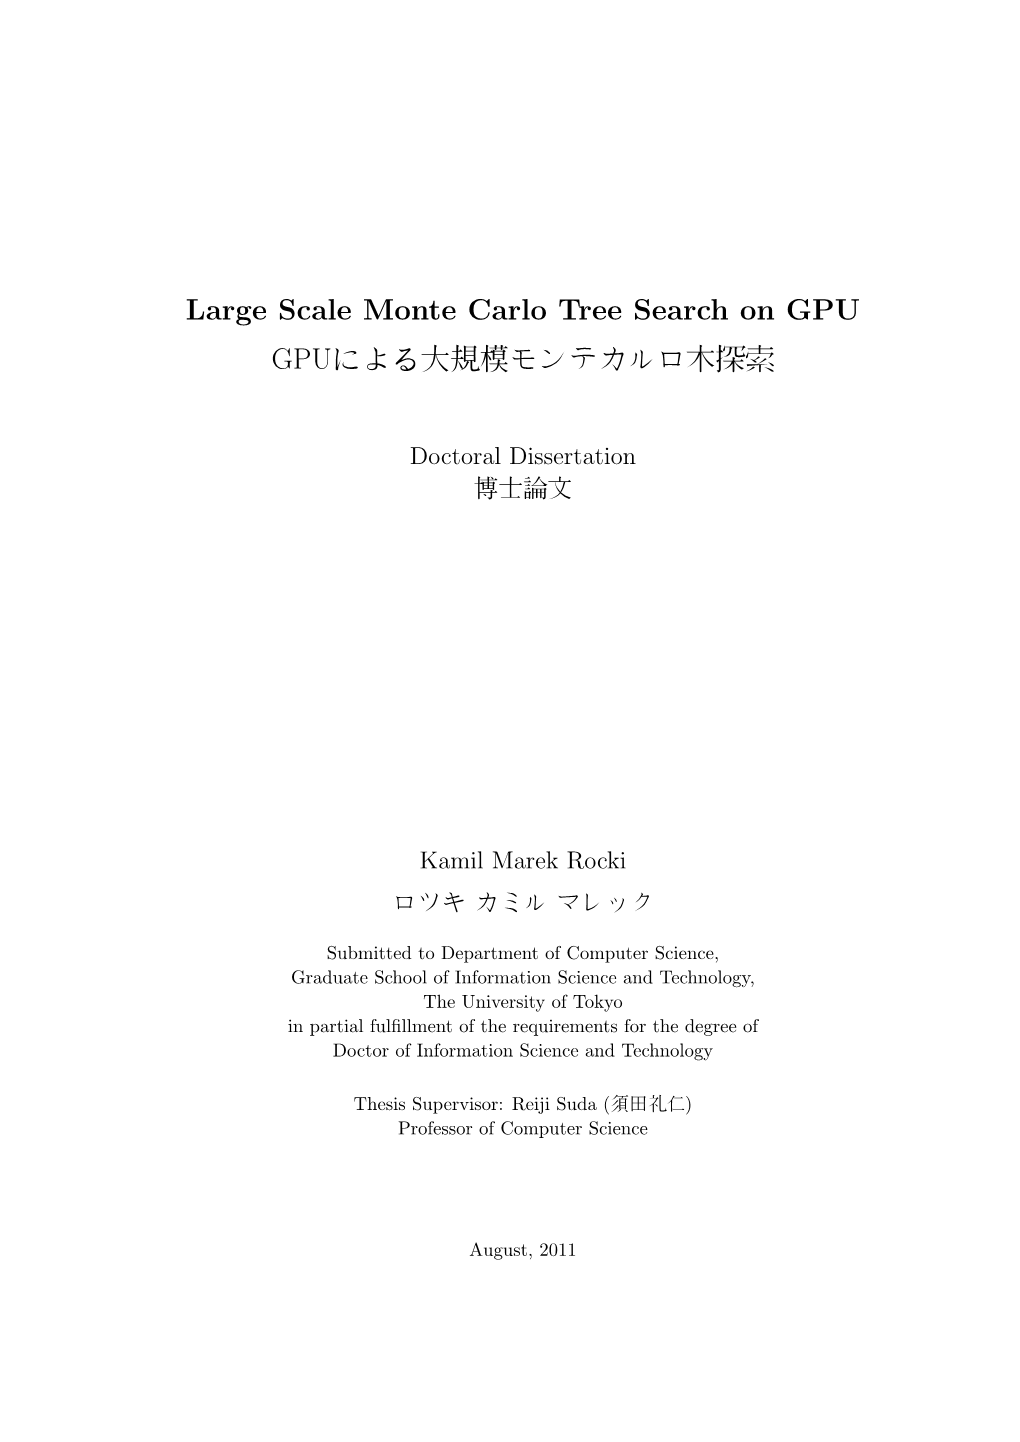 "Large Scale Monte Carlo Tree Search on GPU"